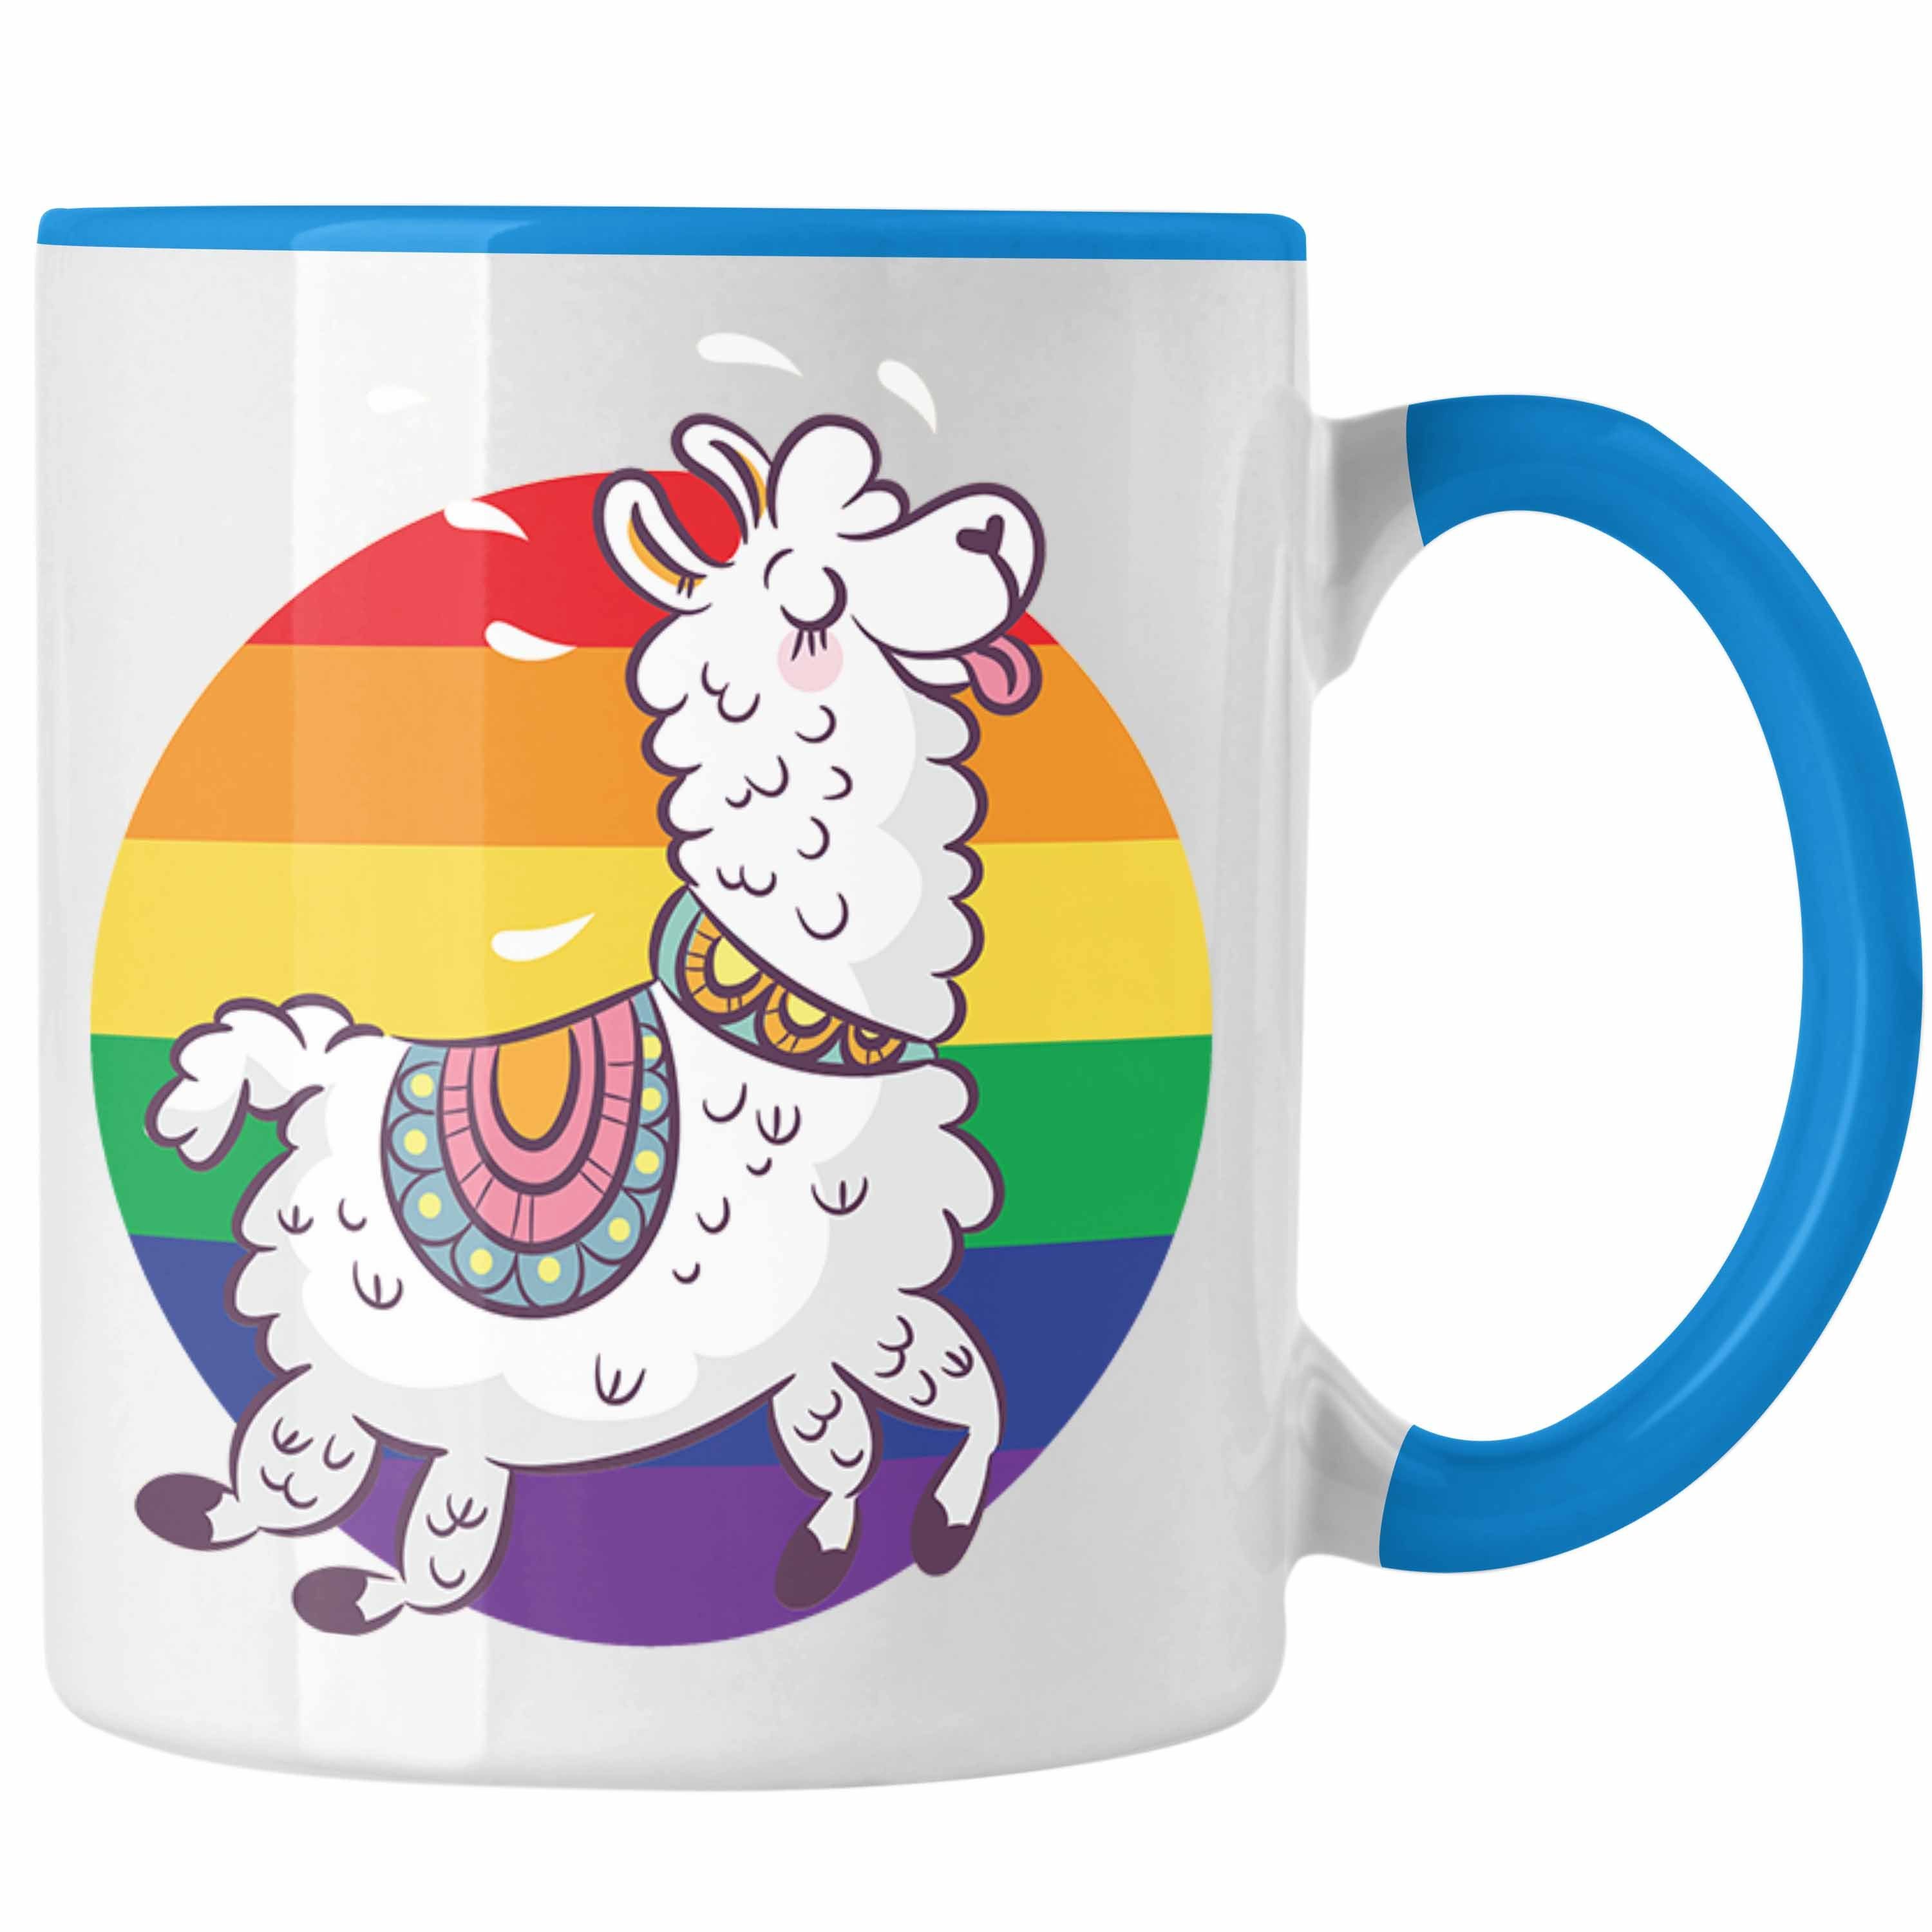 Trendation Tasse Trendation - Regenbogen Tasse Geschenk LGBT Schwule Lesben Transgender Grafik Pride Tolles Llama Blau